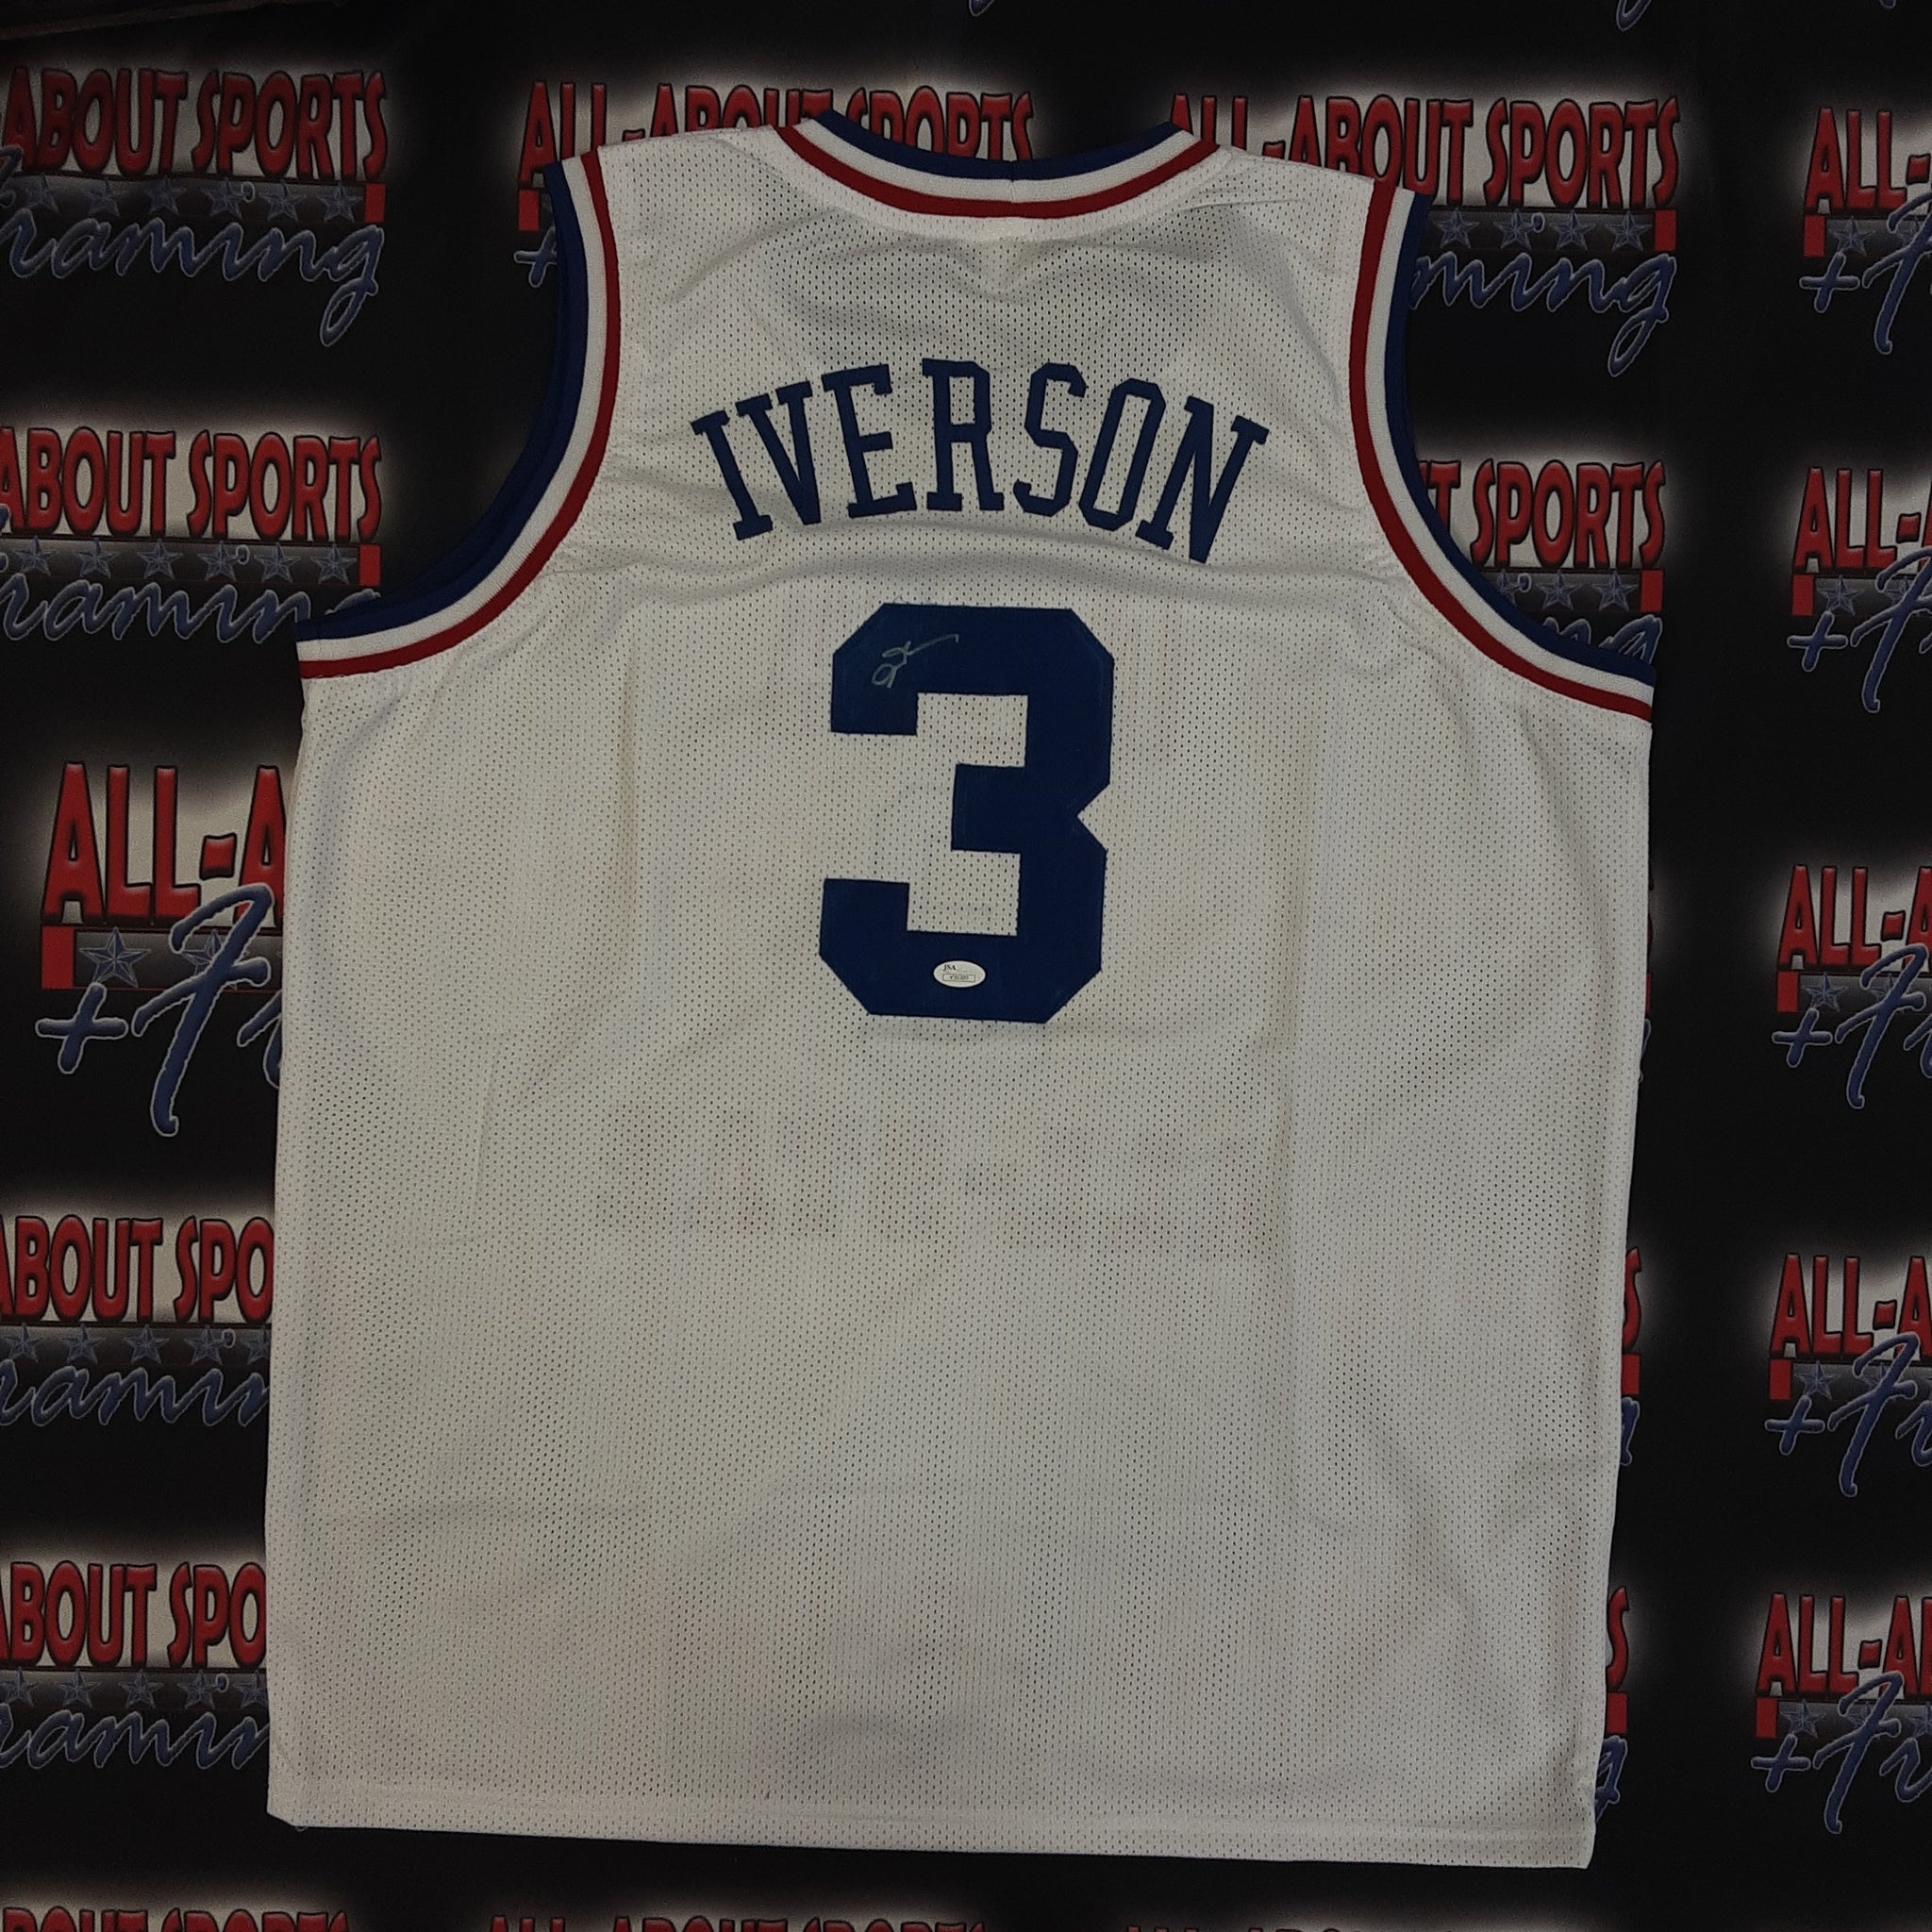 Allen Iverson Signed Custom Black Pro-Style Basketball Jersey JSA